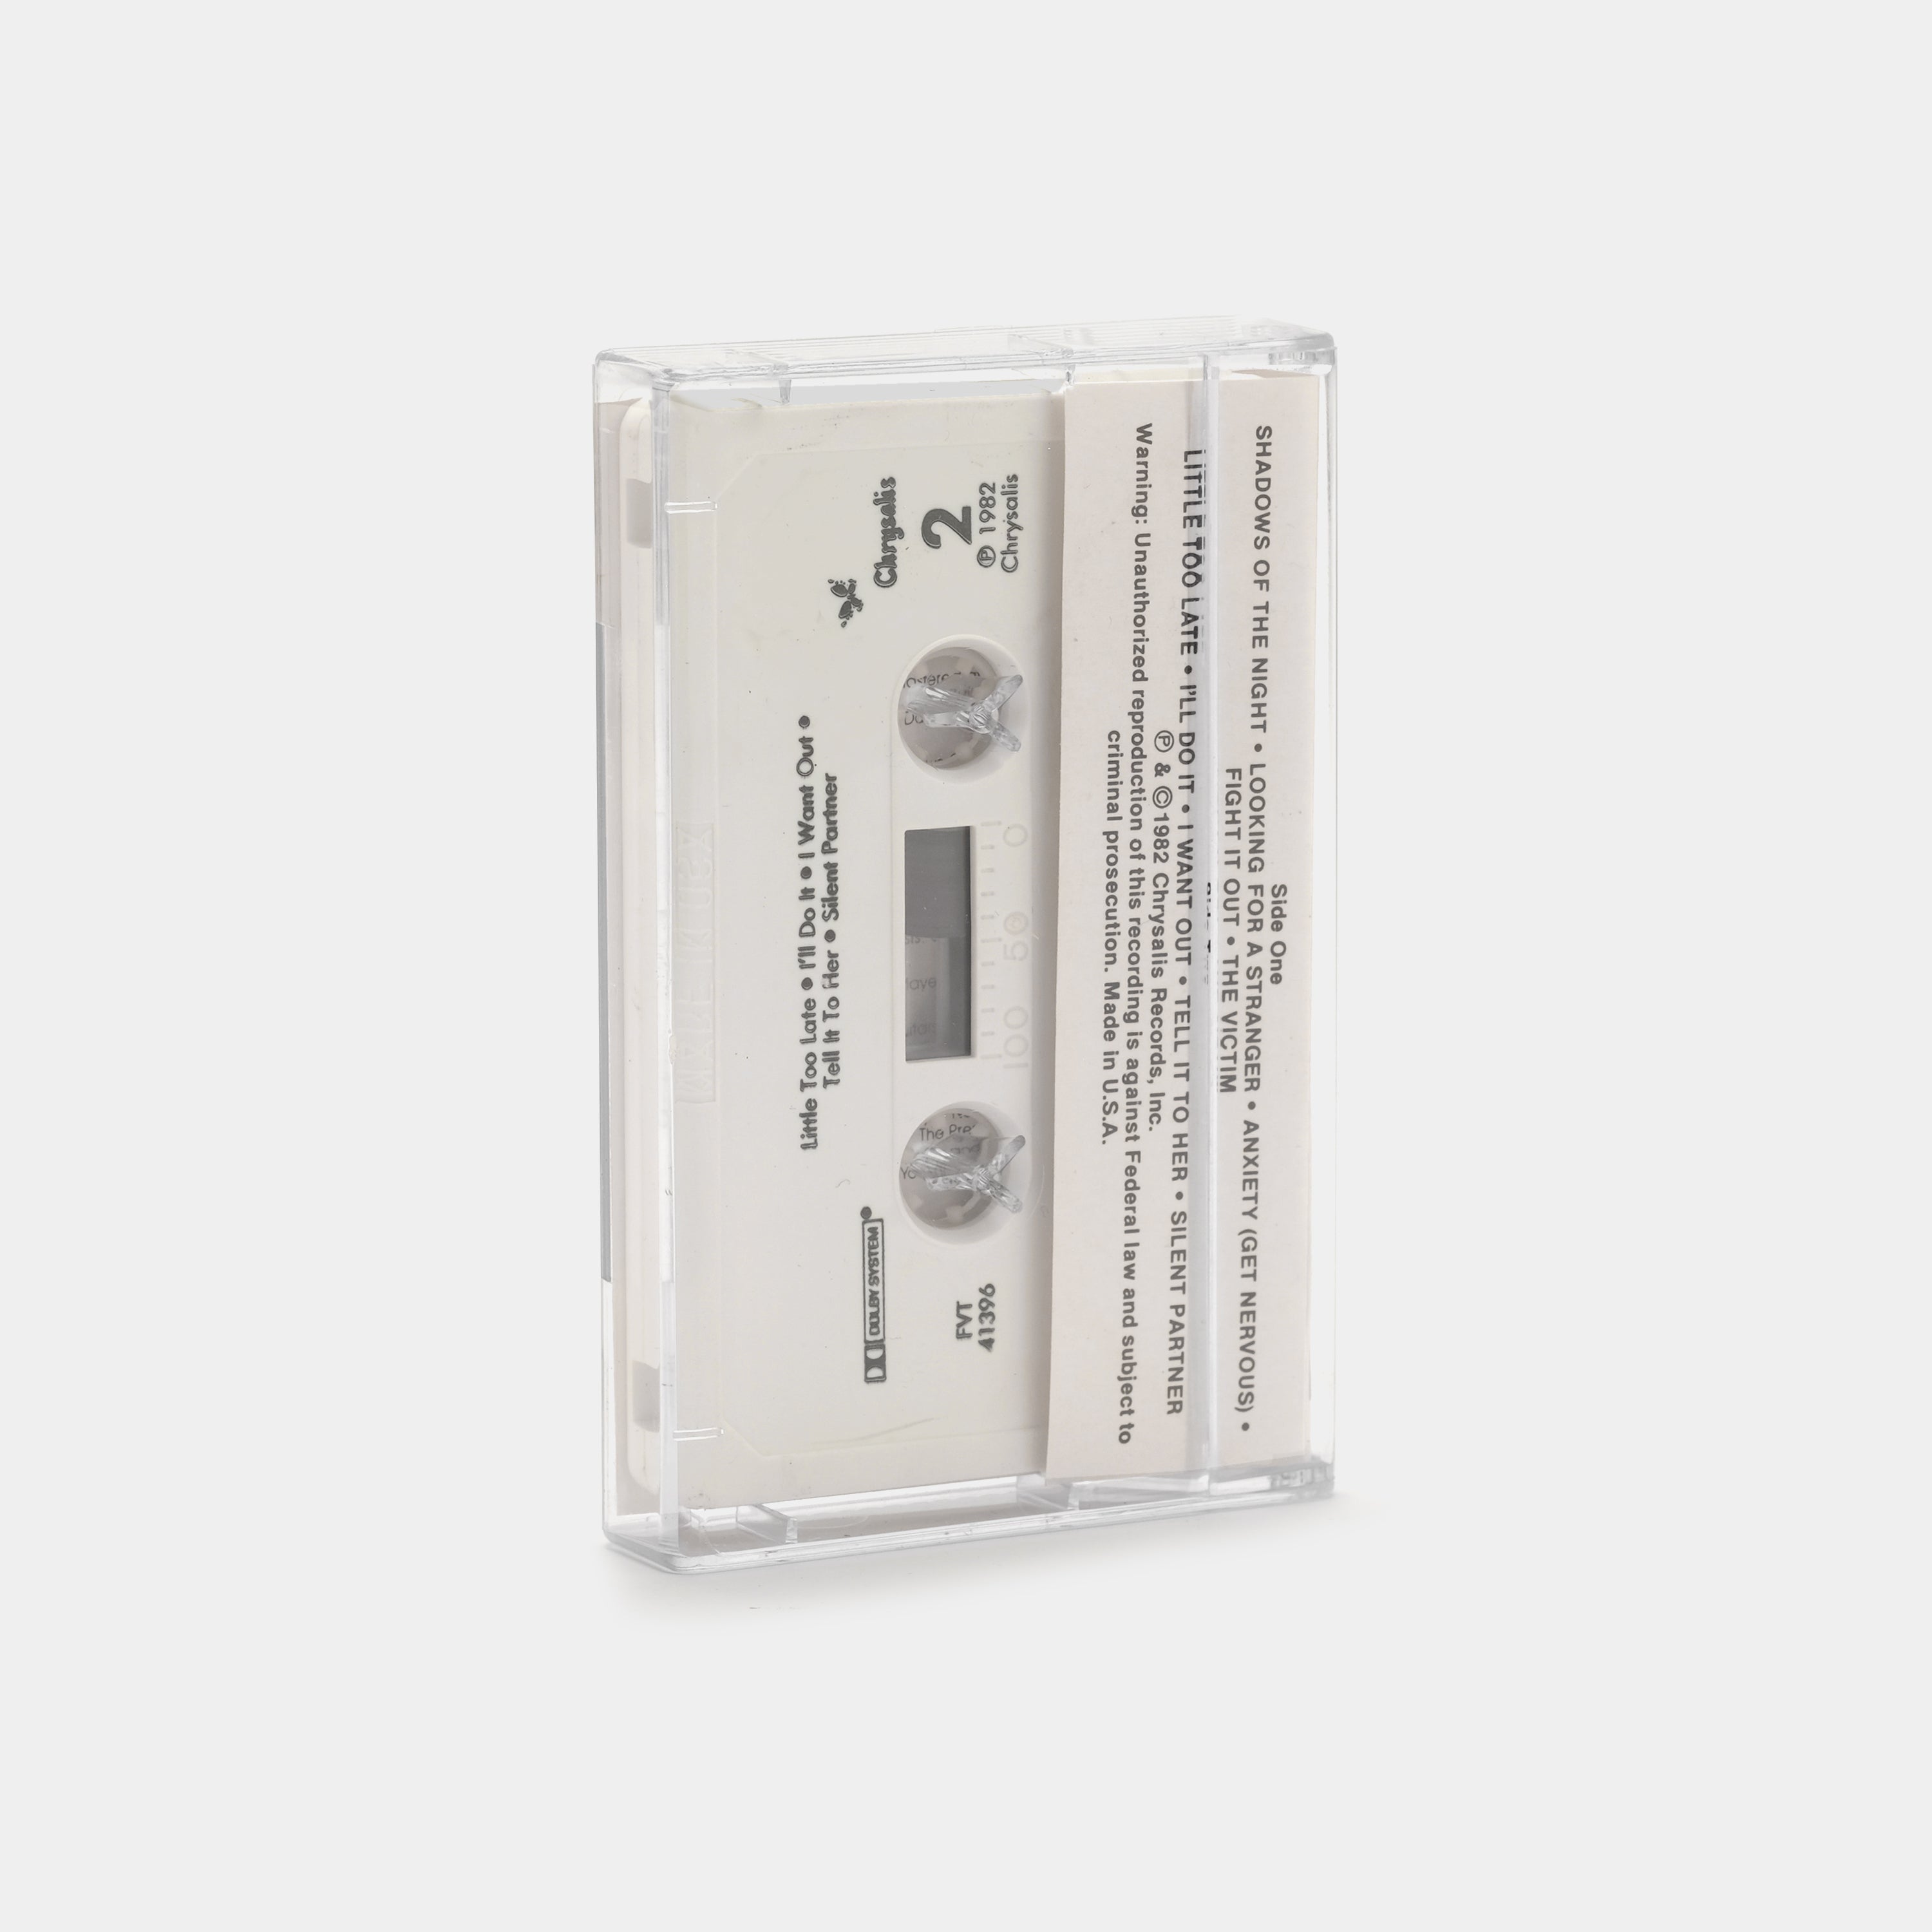 Pat Benatar - Get Nervous Cassette Tape